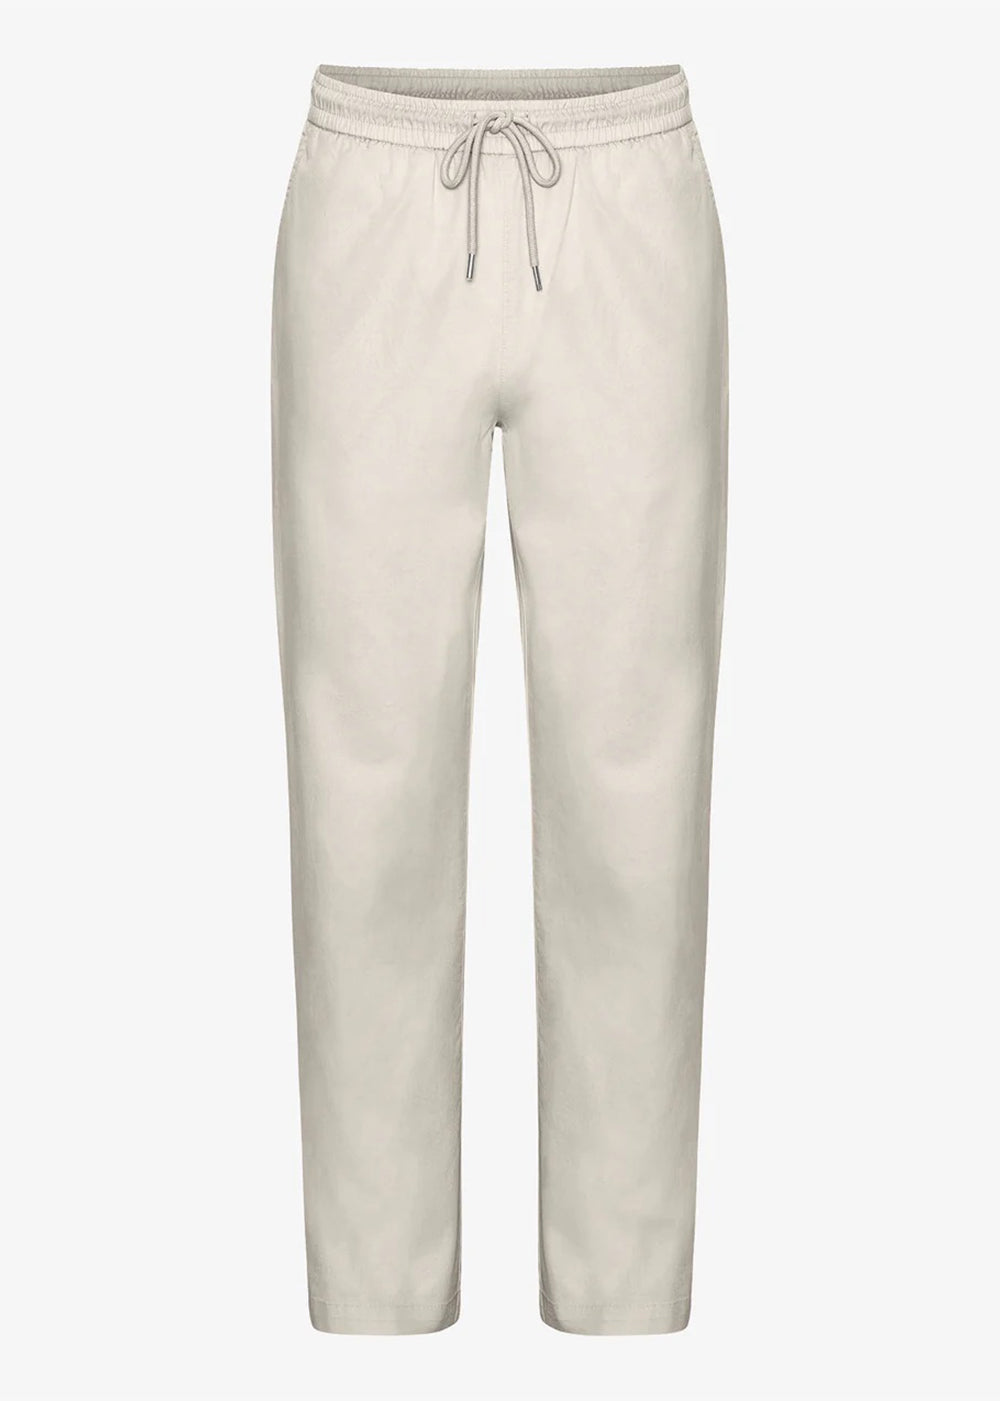 Organic Twill Pants - Ivory White - Colorful Standard Canada - Danali